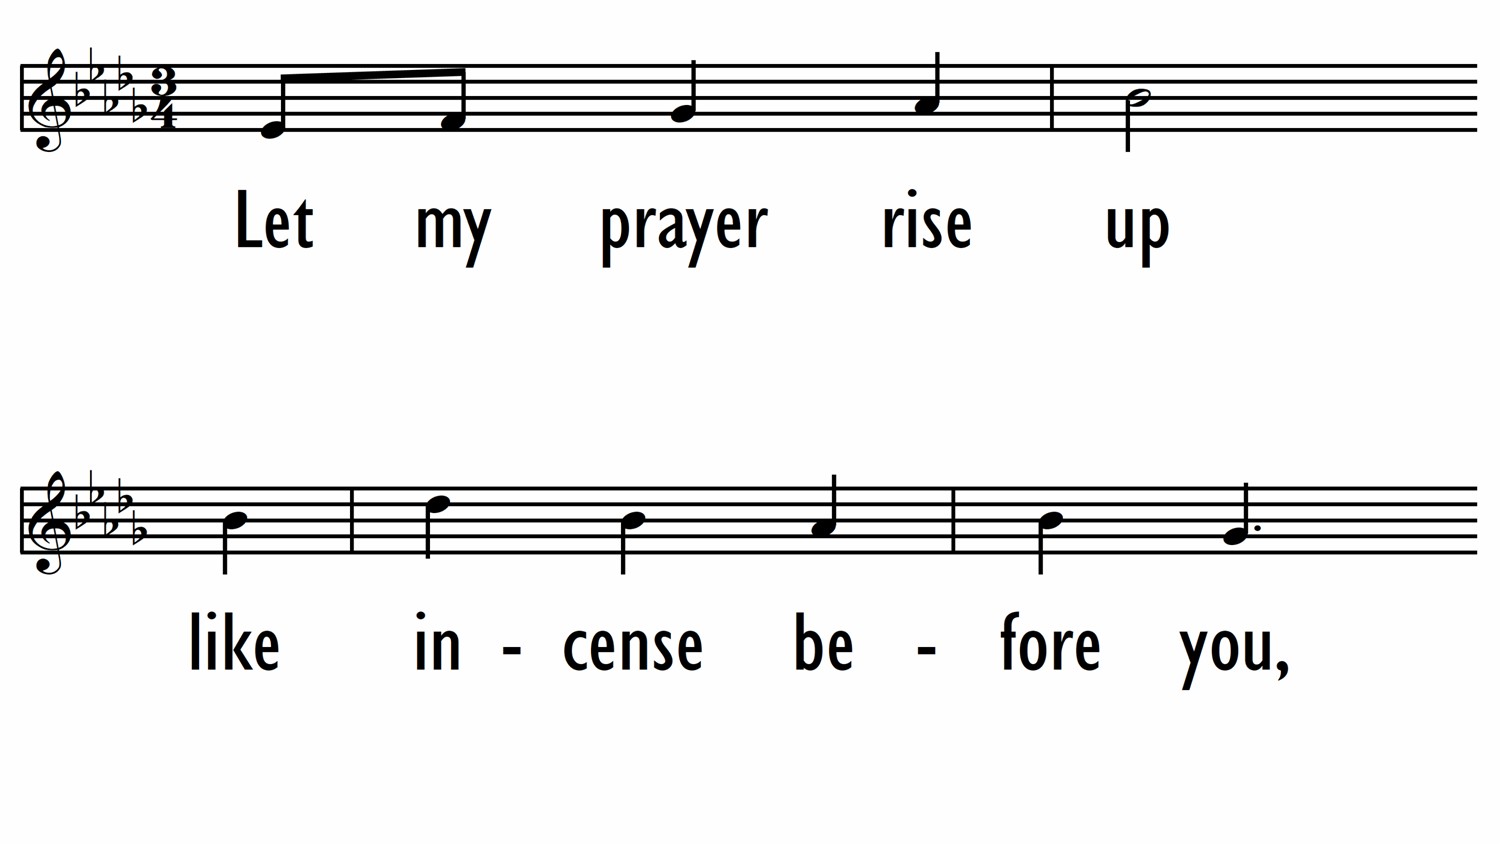 HOLDEN EVENING PRAYER - PSALM 141-ppt